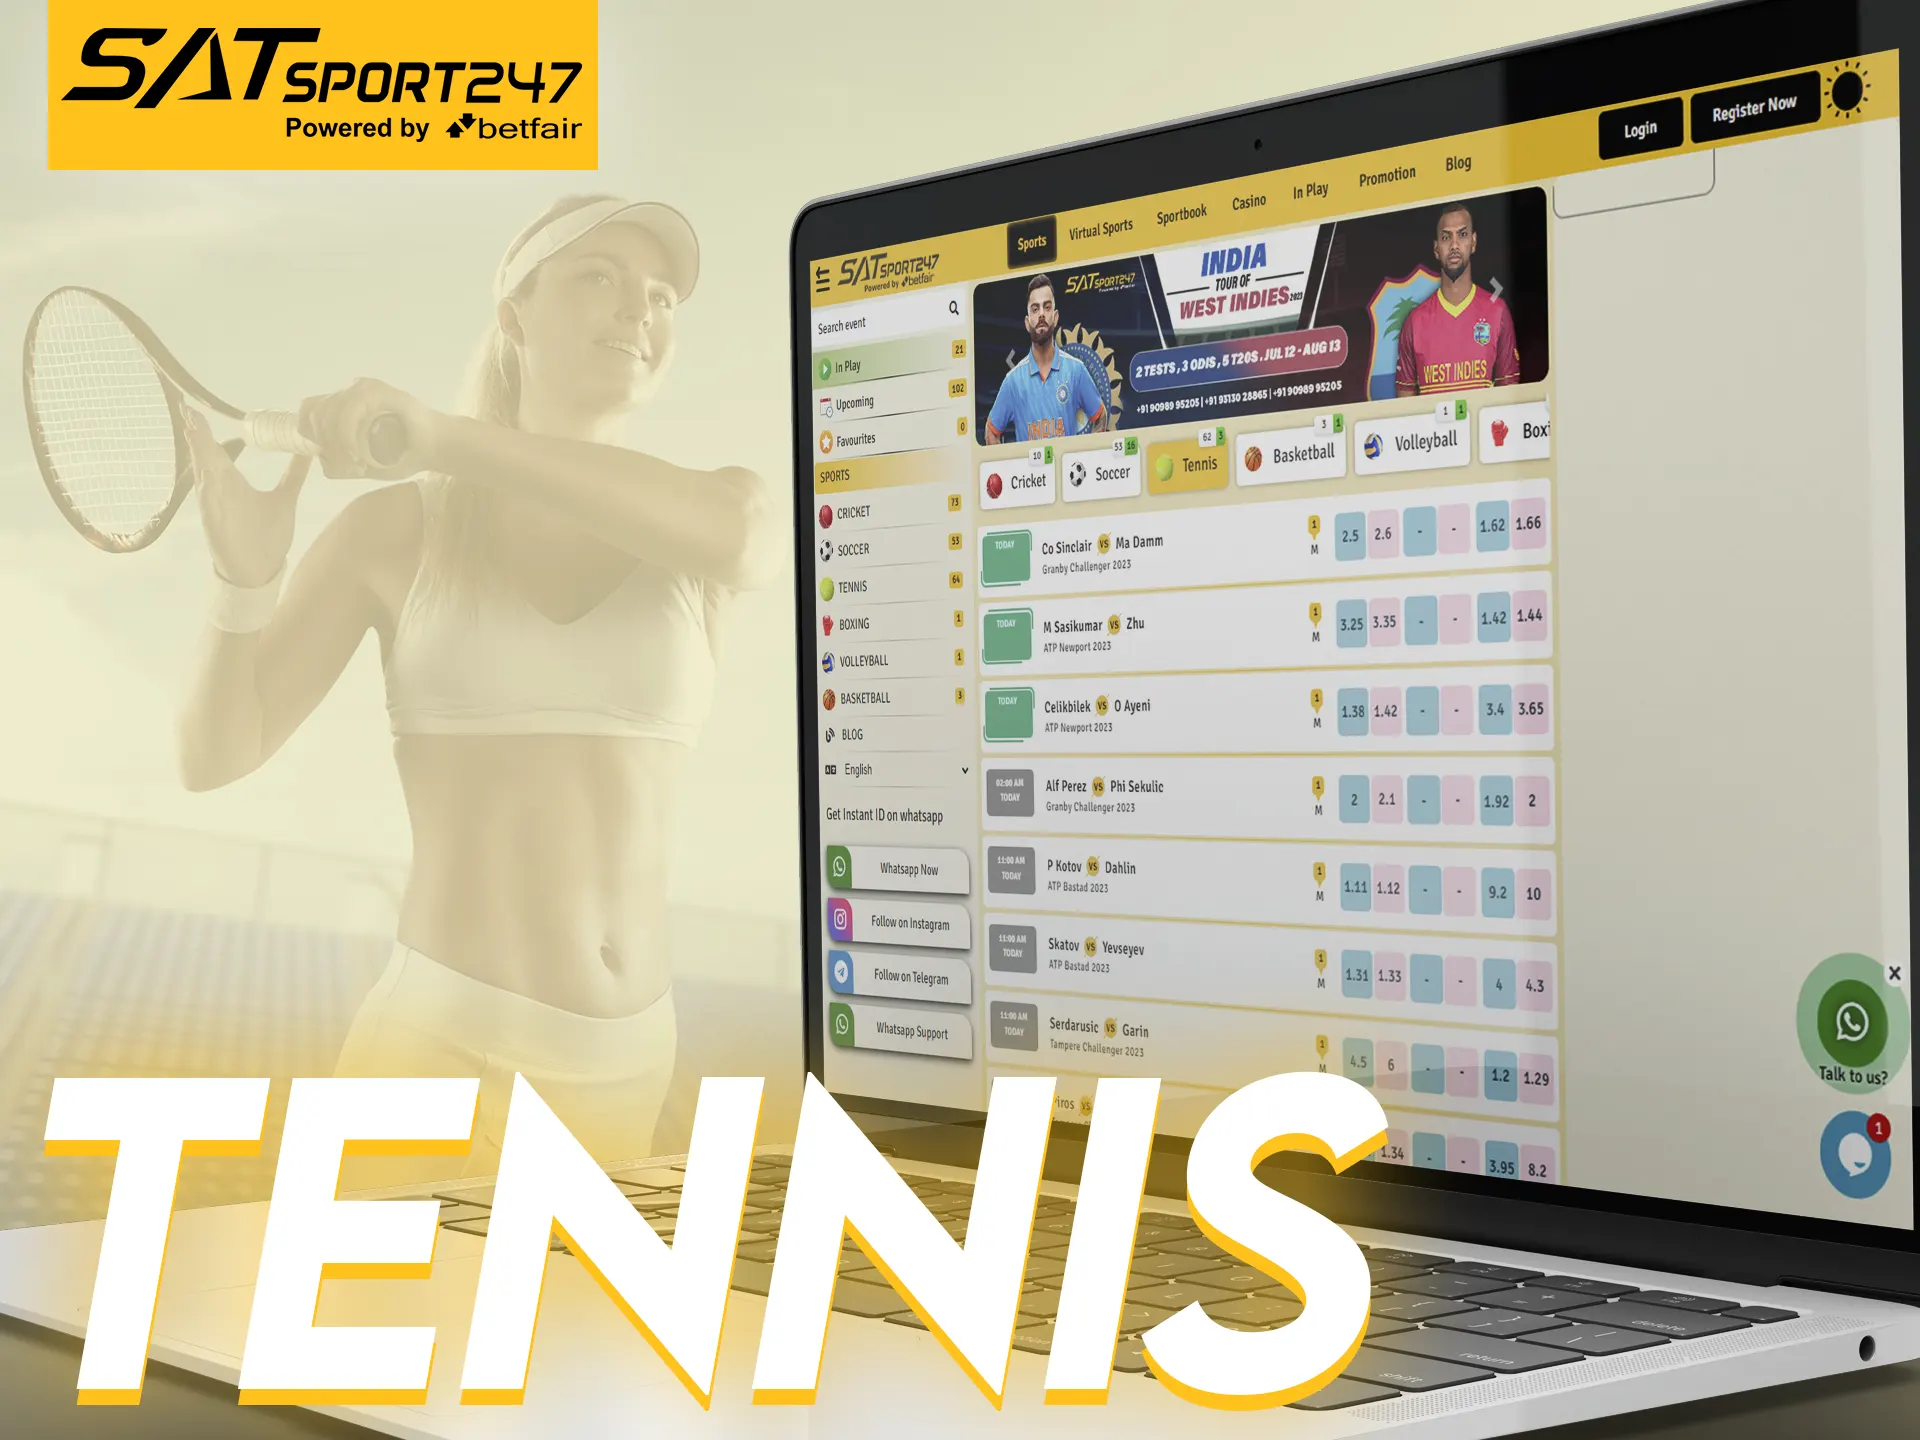 With Satsport247, make your winning tennis bet.